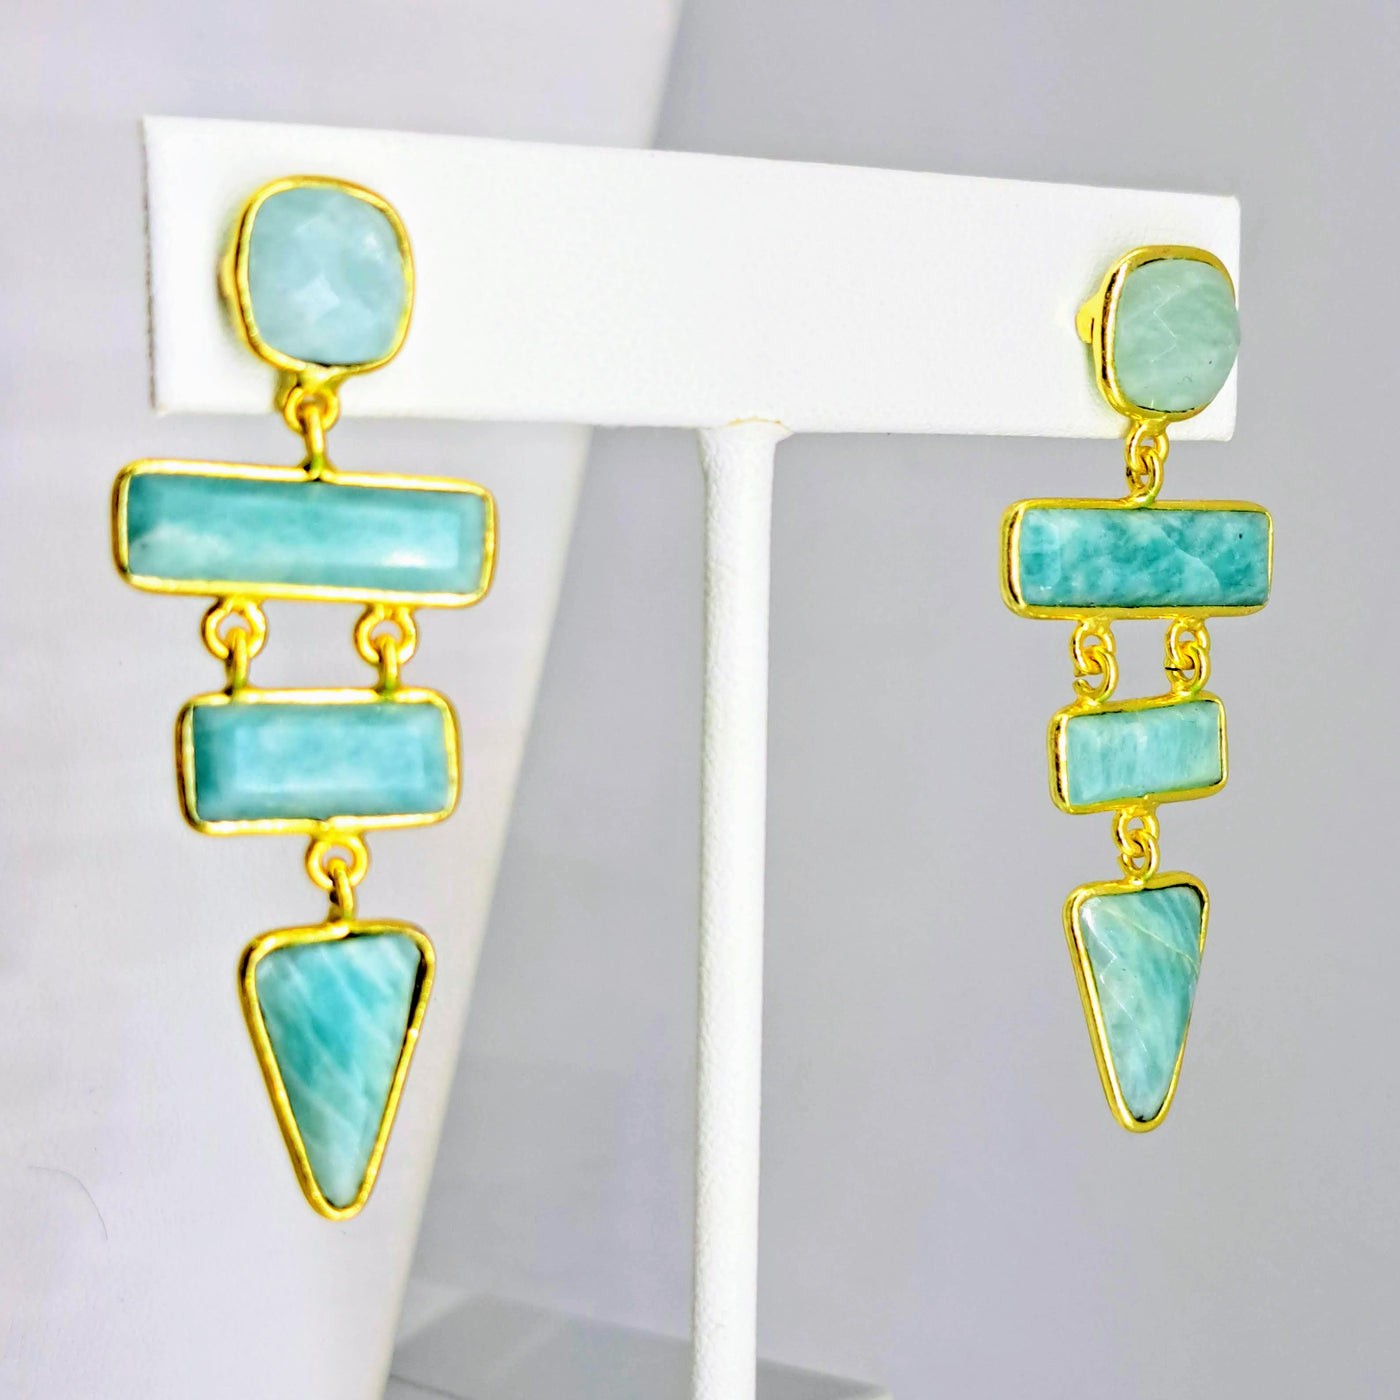 "Ladders" 2" Earrings - Amazonite, Gold Sterling